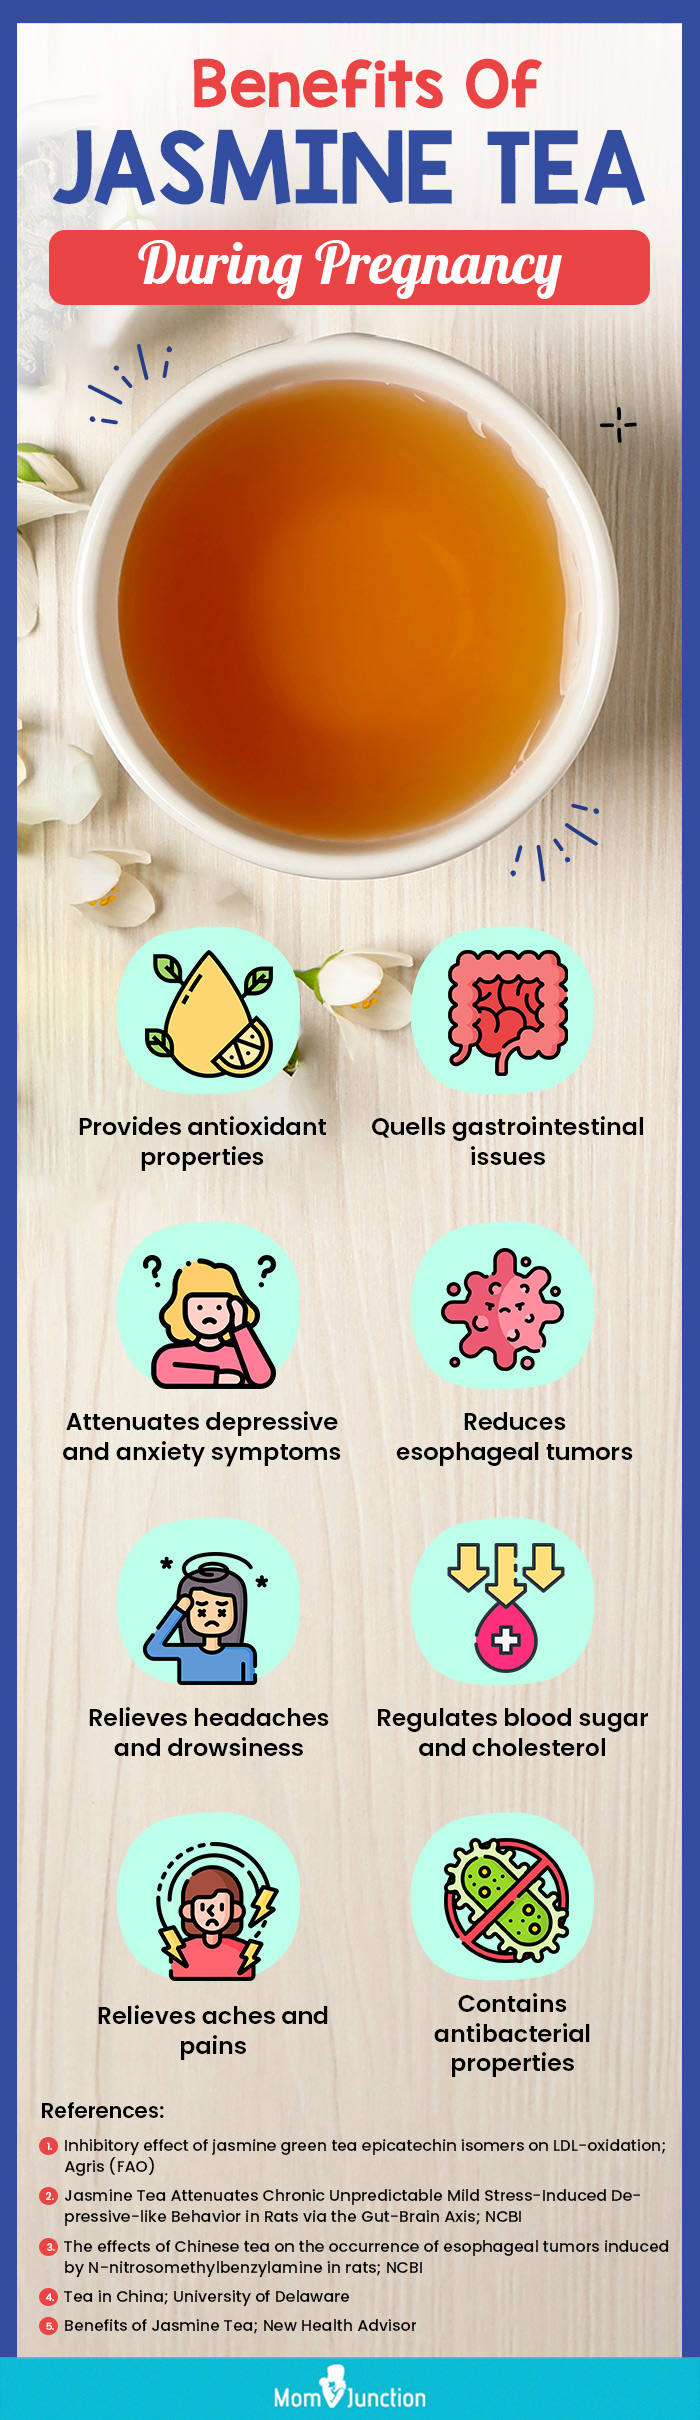 benefits of jasmine tea during pregnancy (infographic)